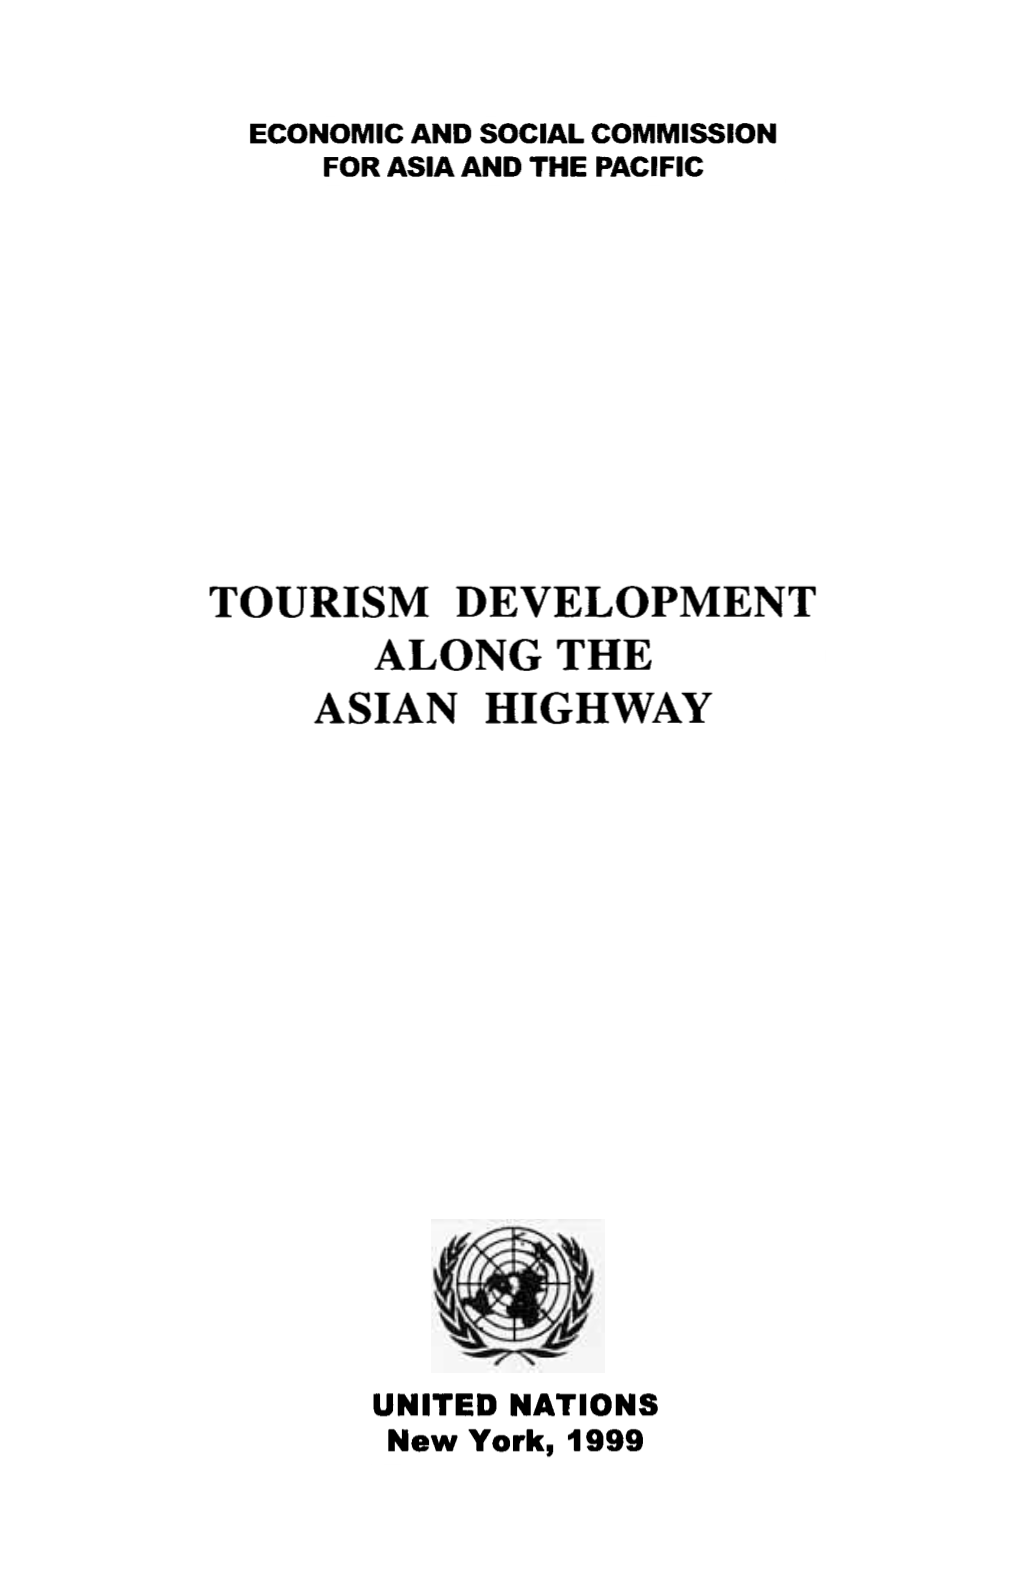 Tourism Development Along the Asian Highway